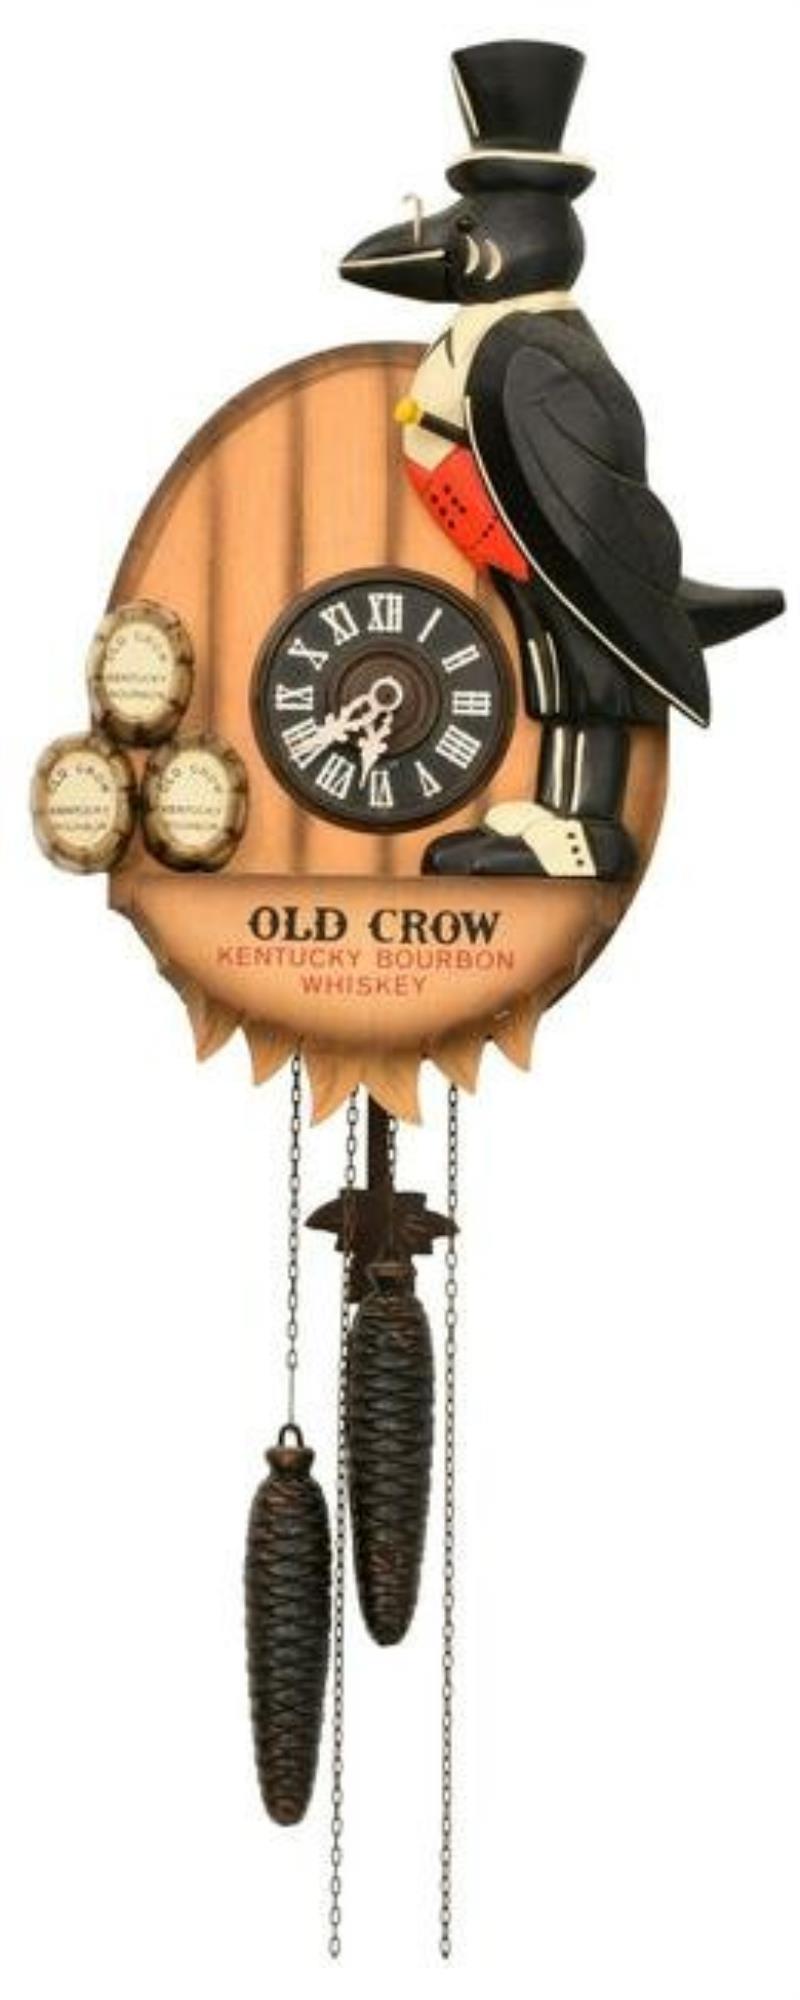 Old Crow Whiskey Advertising Cuckoo Clock